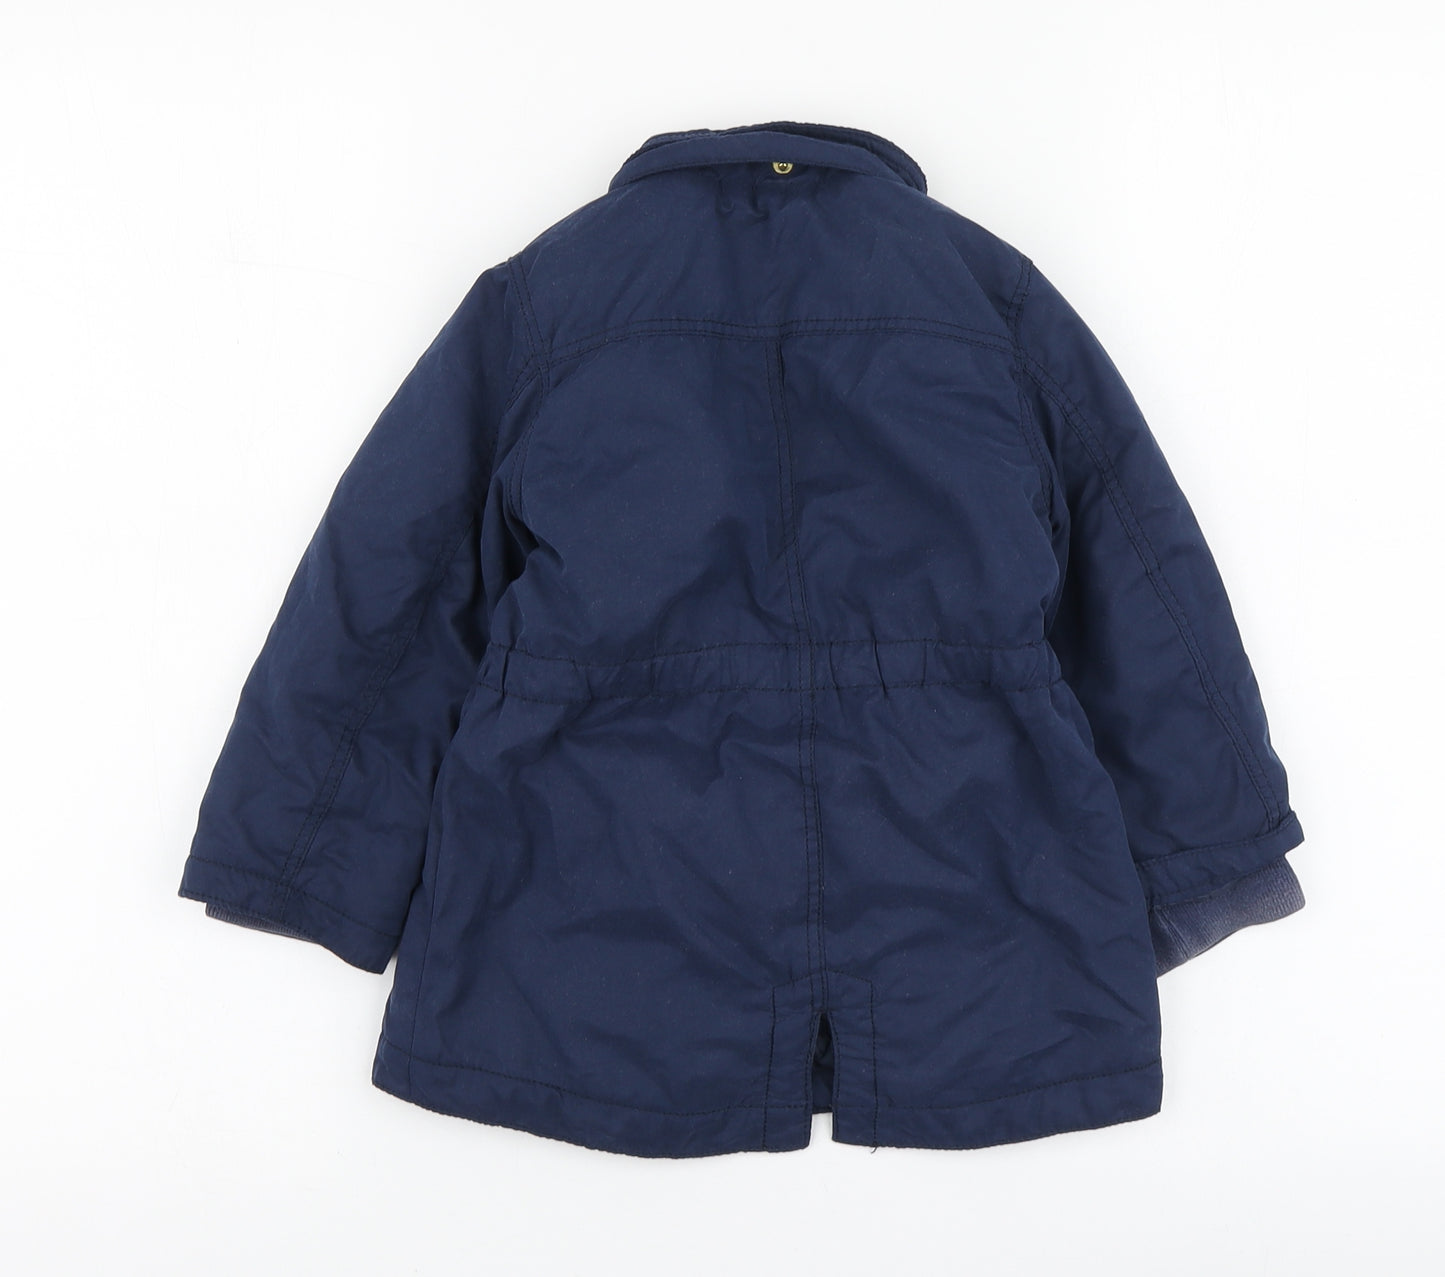 H&M Girls Blue Jacket Size 3-4 Years